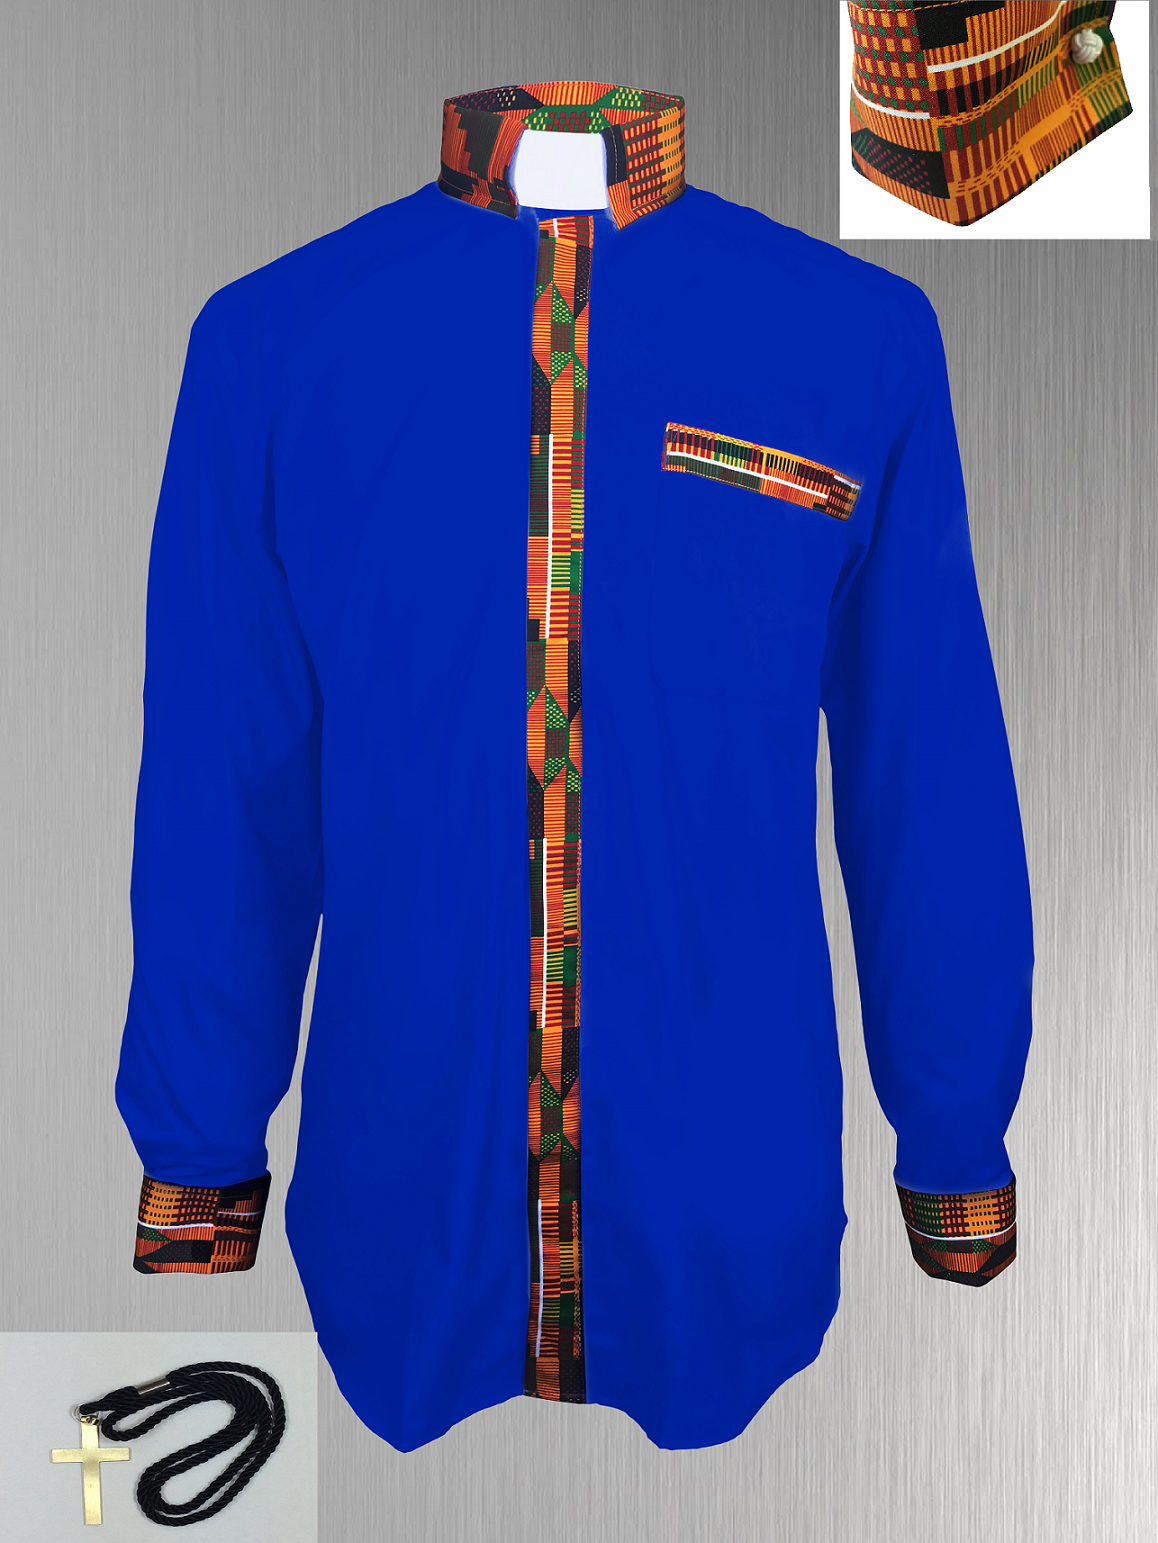 Royal Blue Clergy Shirt with Kente Cloth